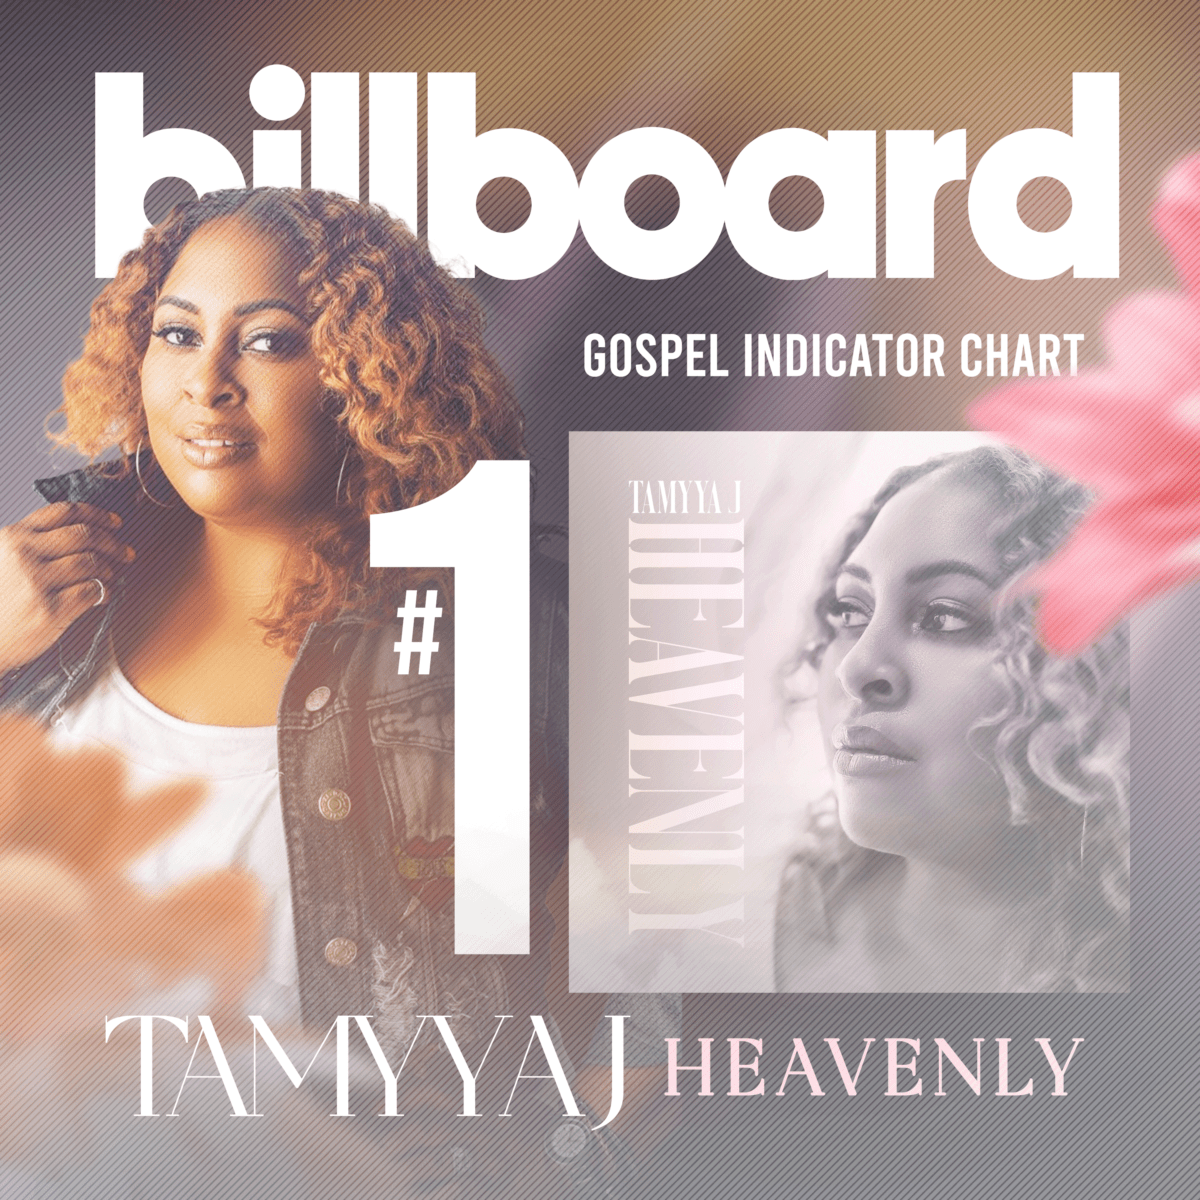 tamyya-j-celebrates-as-“heavenly”-hits-#1-on-billboard’s-gospel-indicator-chart!